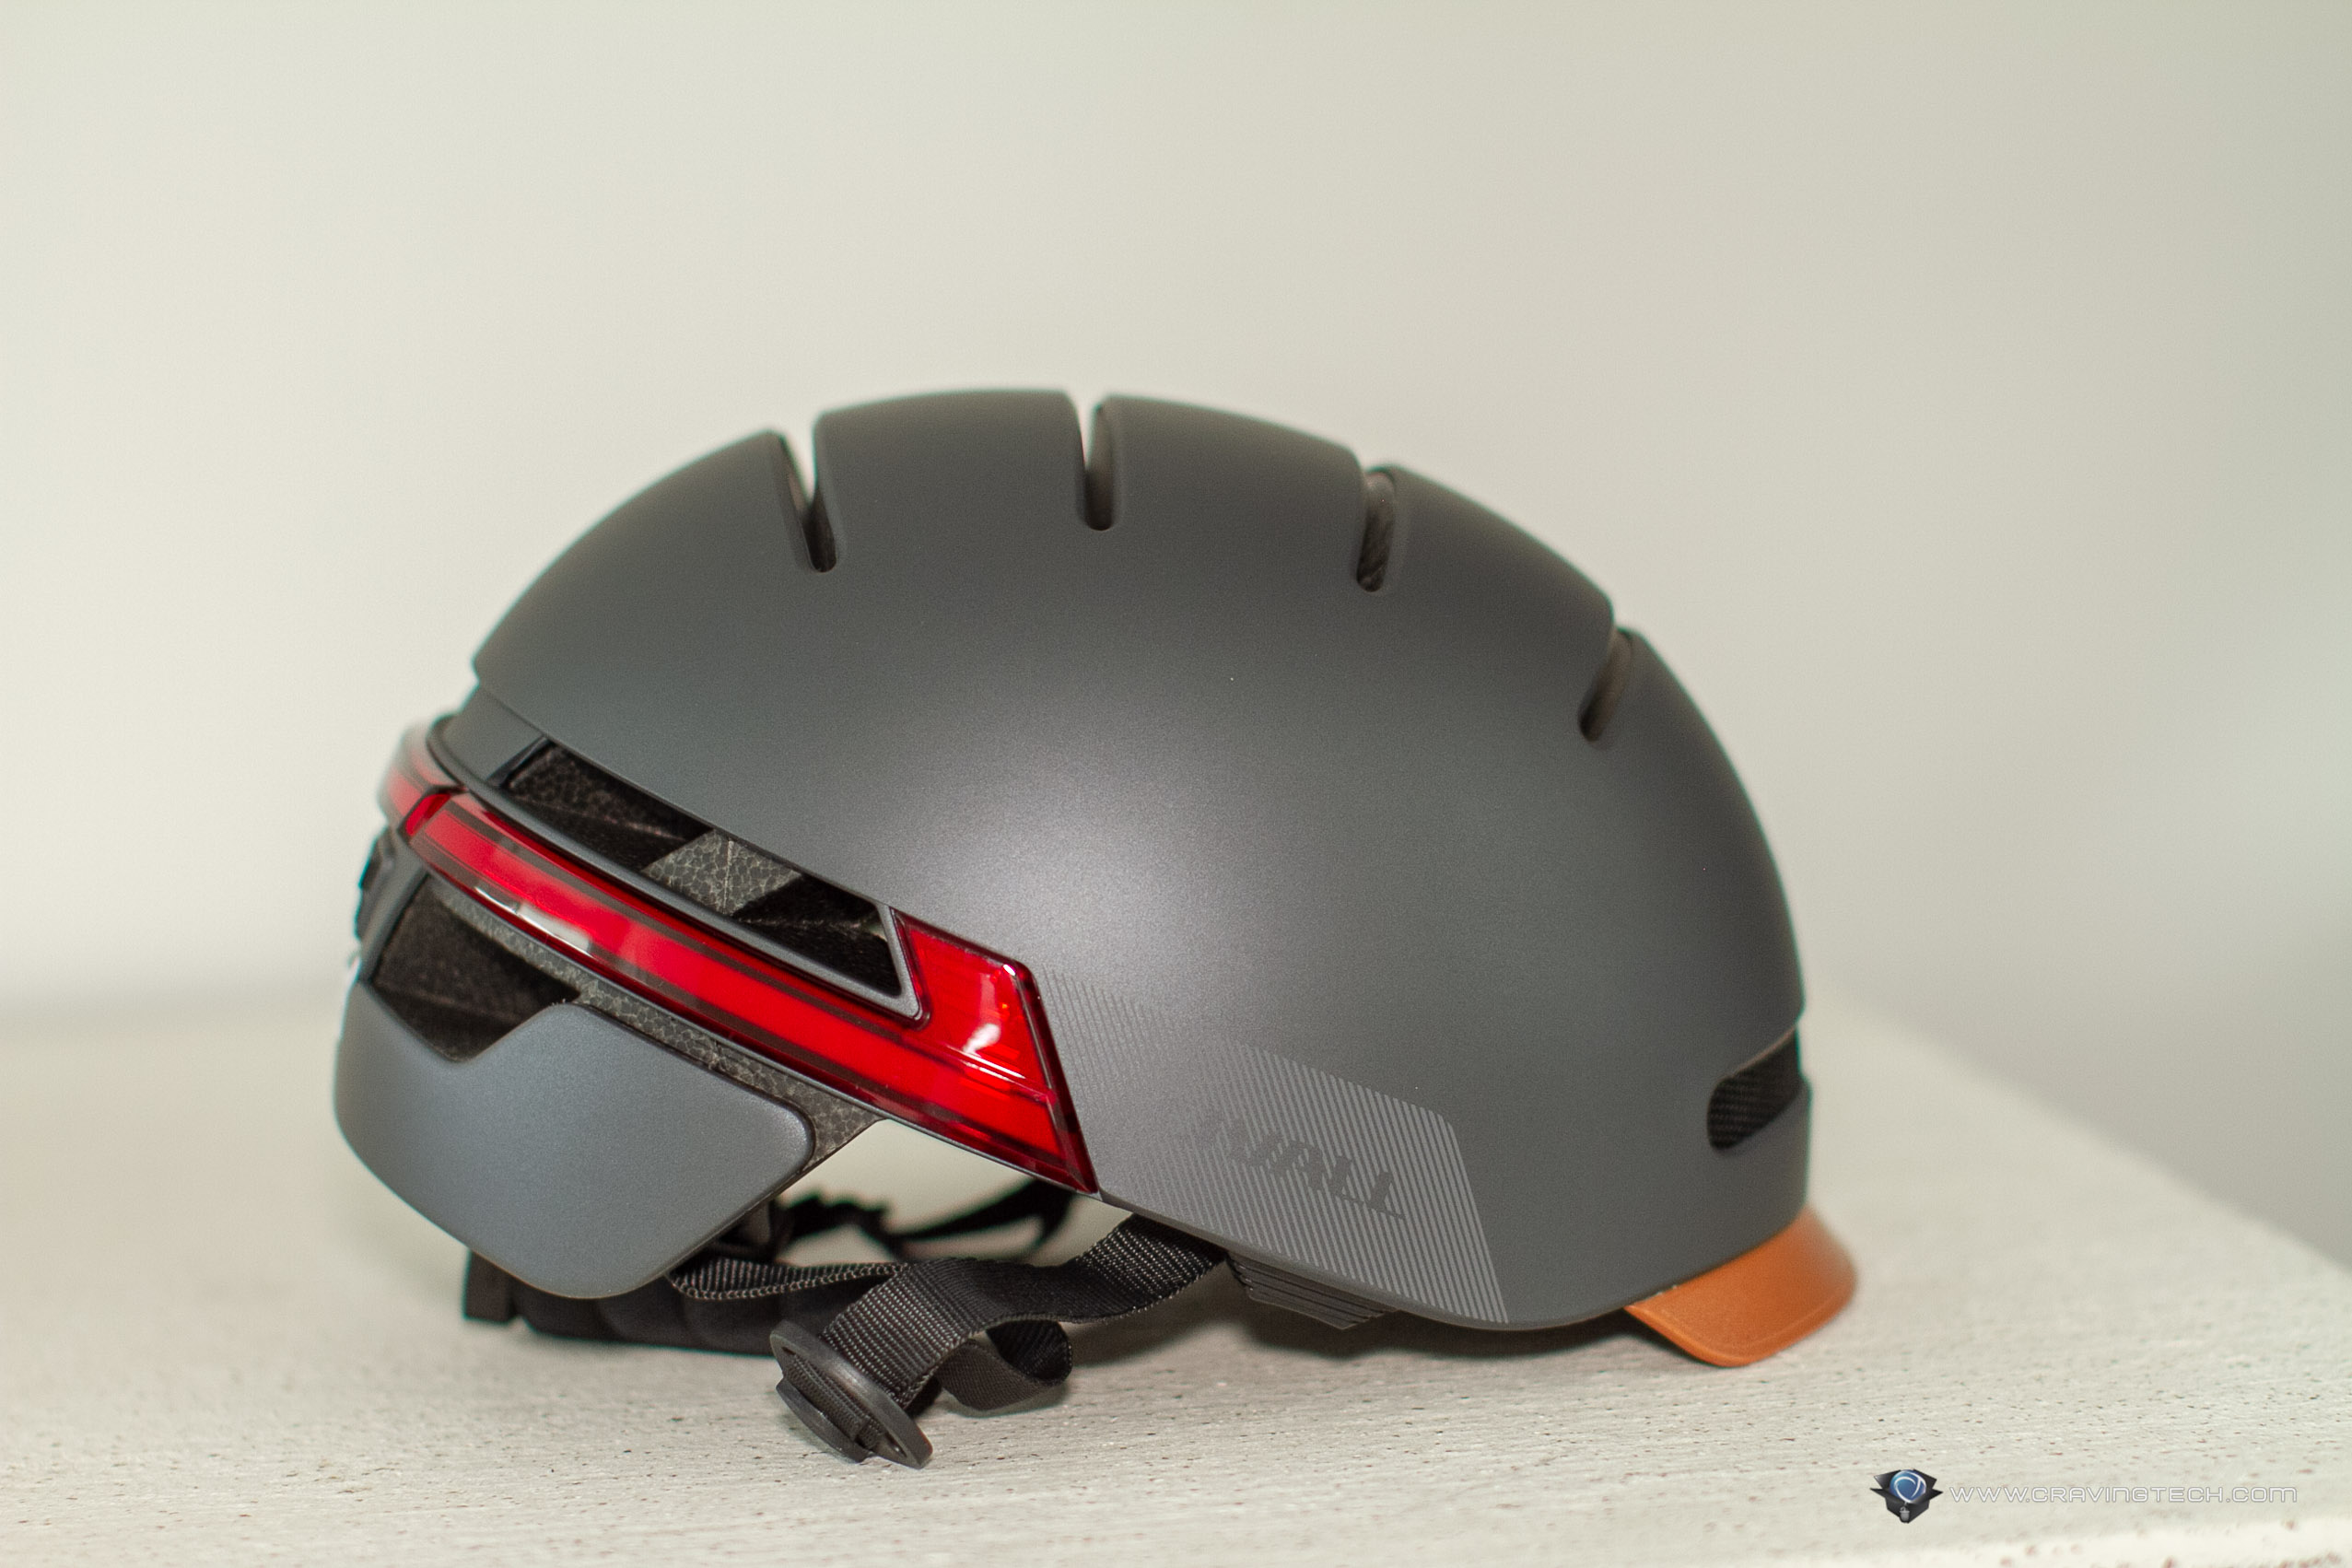 A smart helmet? Why not?